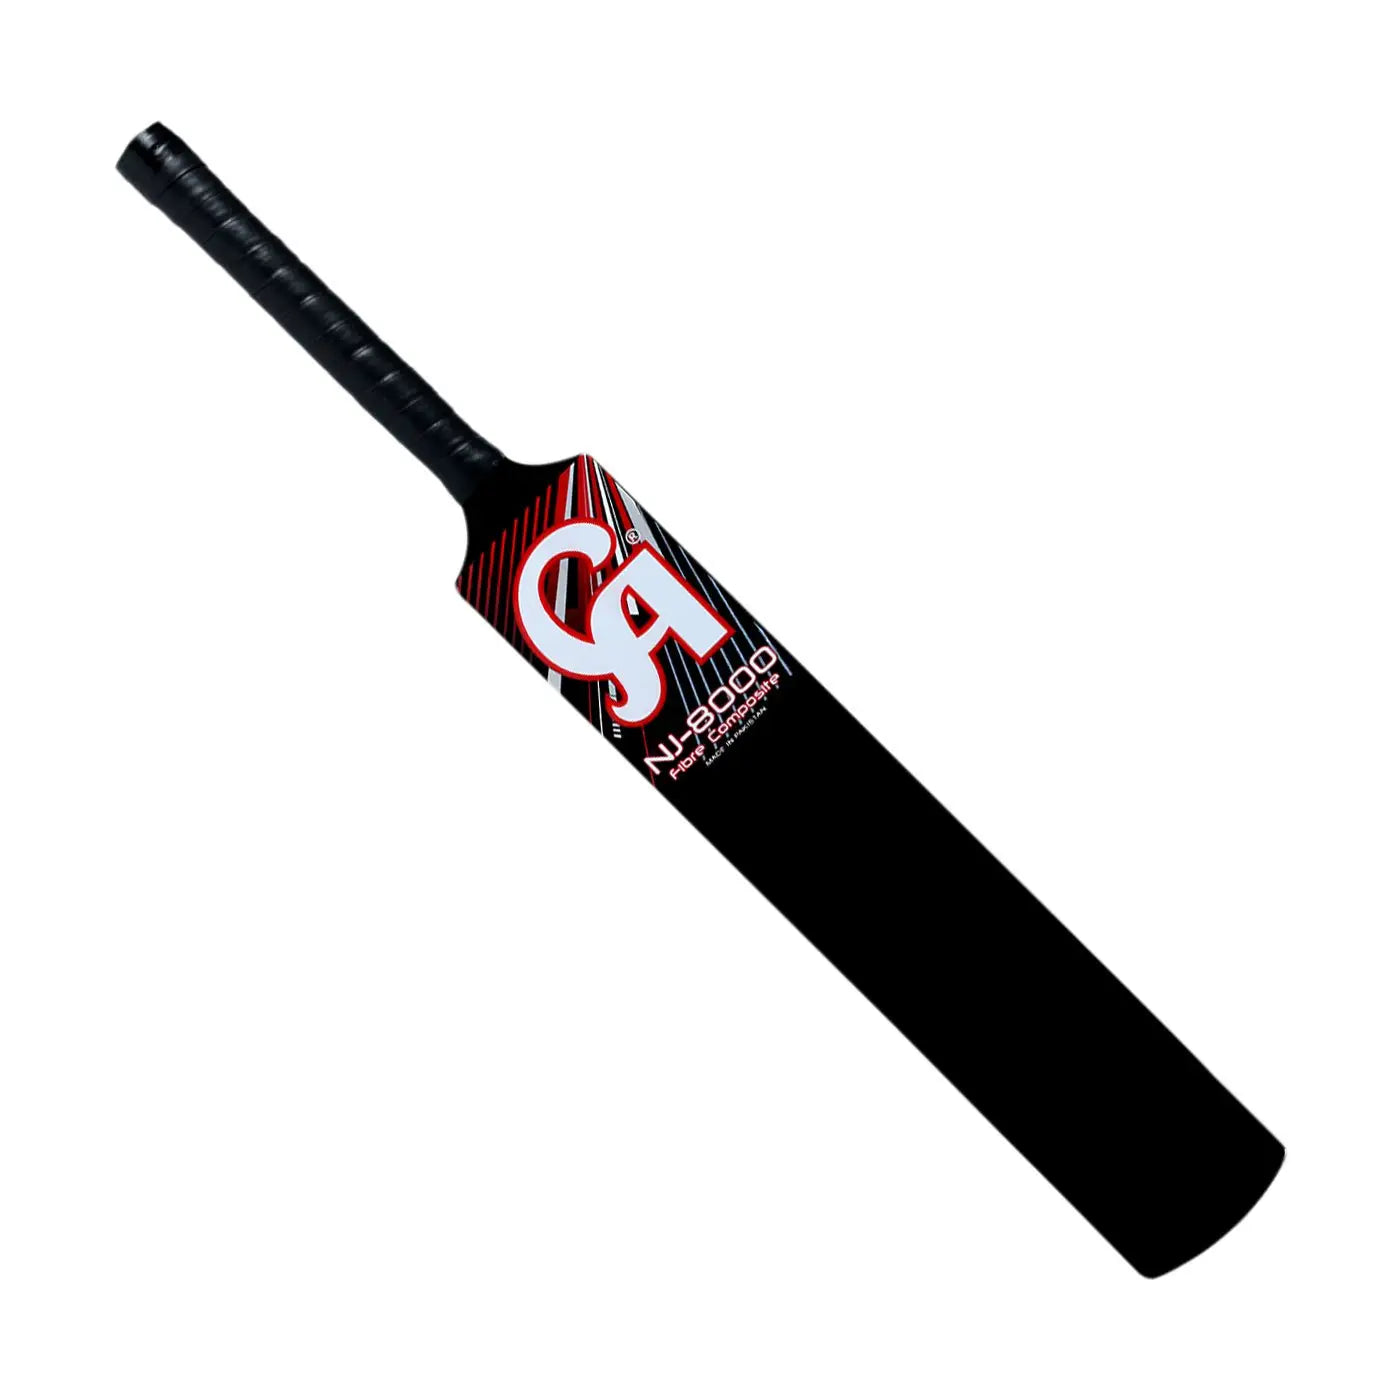 CA NJ 8000 Cricket Fiber Composite Bat Tape Ball Tennis Softball Black - BATS - SOFTBALL